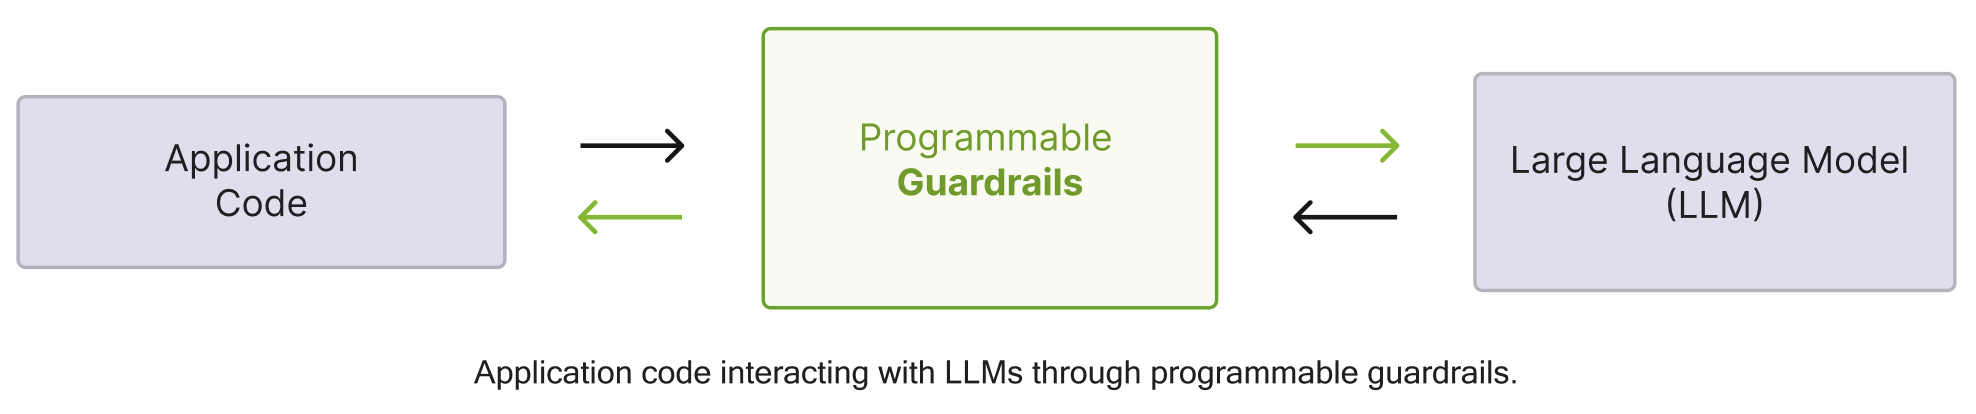 Programmable Guardrails